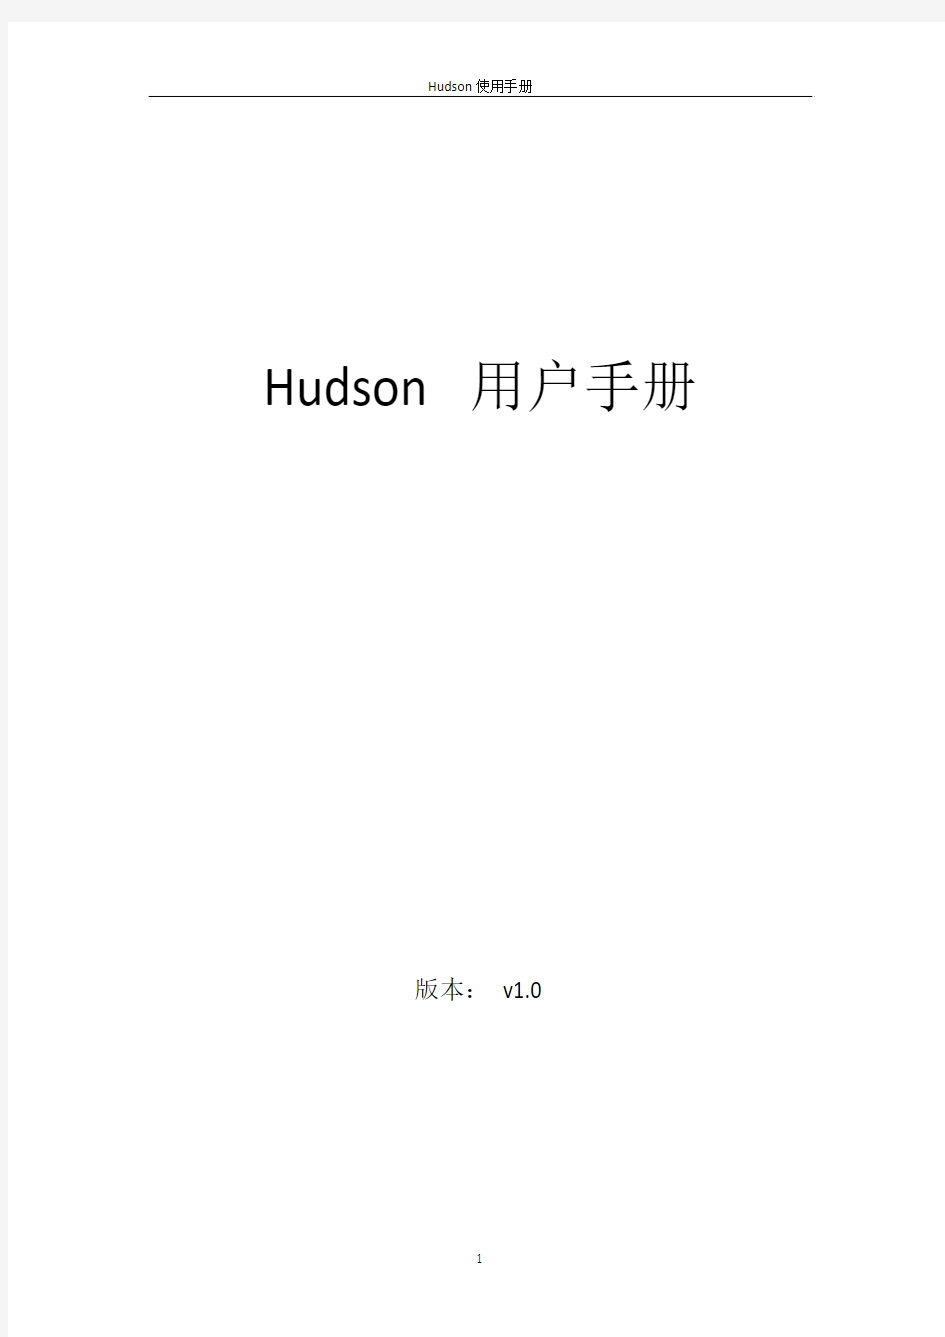 Hudson_Jenkins+SVN 配置使用手册__实验室编写